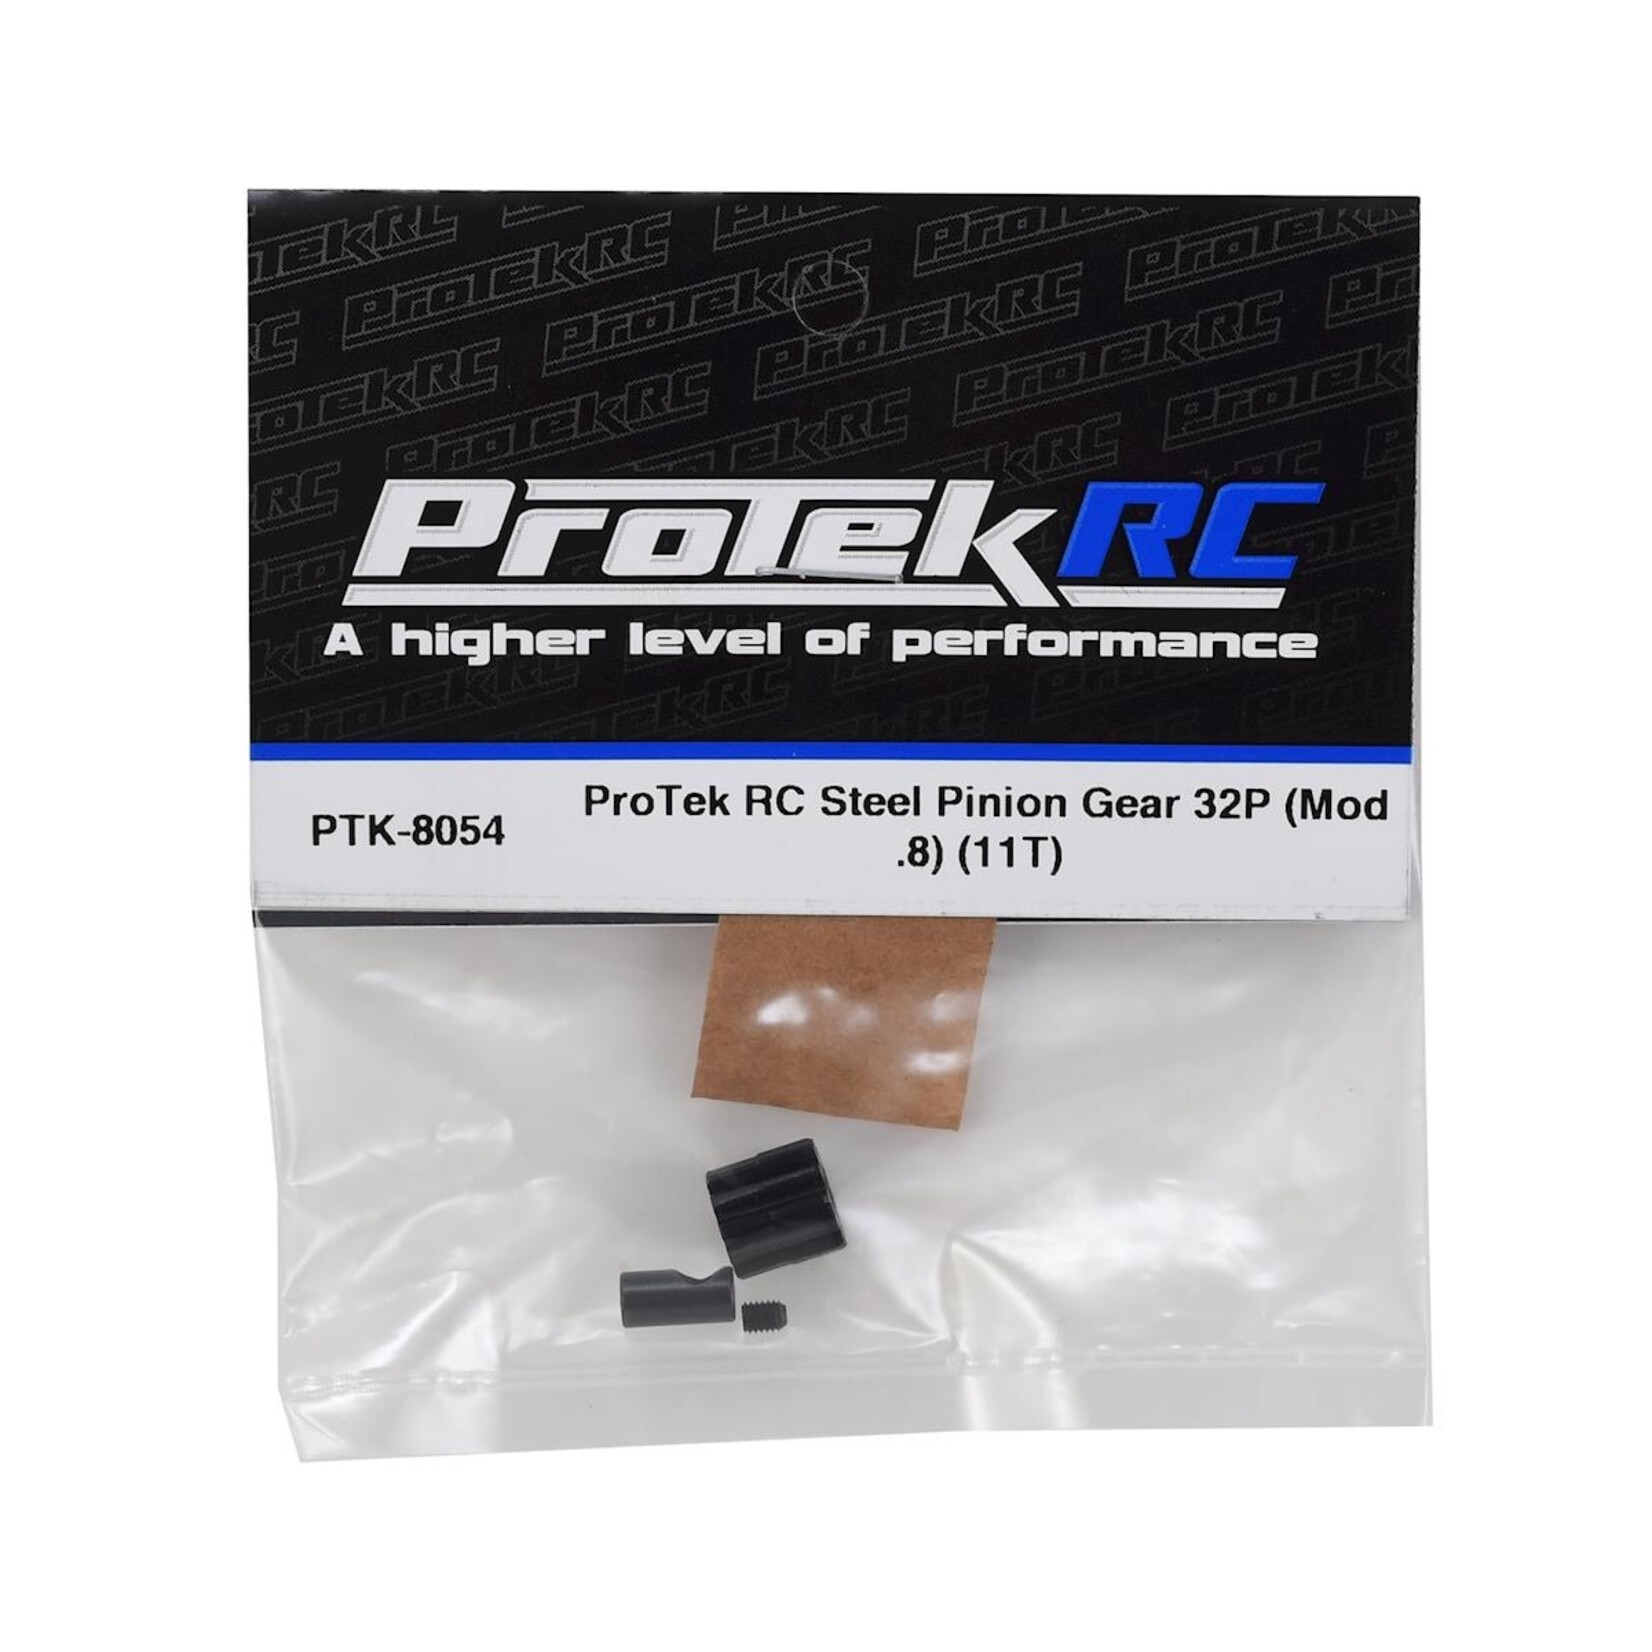 ProTek RC ProTek RC Steel 32P Pinion Gear w/3.17mm Reducer Sleeve (Mod .8) (5mm Bore) (11T) #PTK-8054